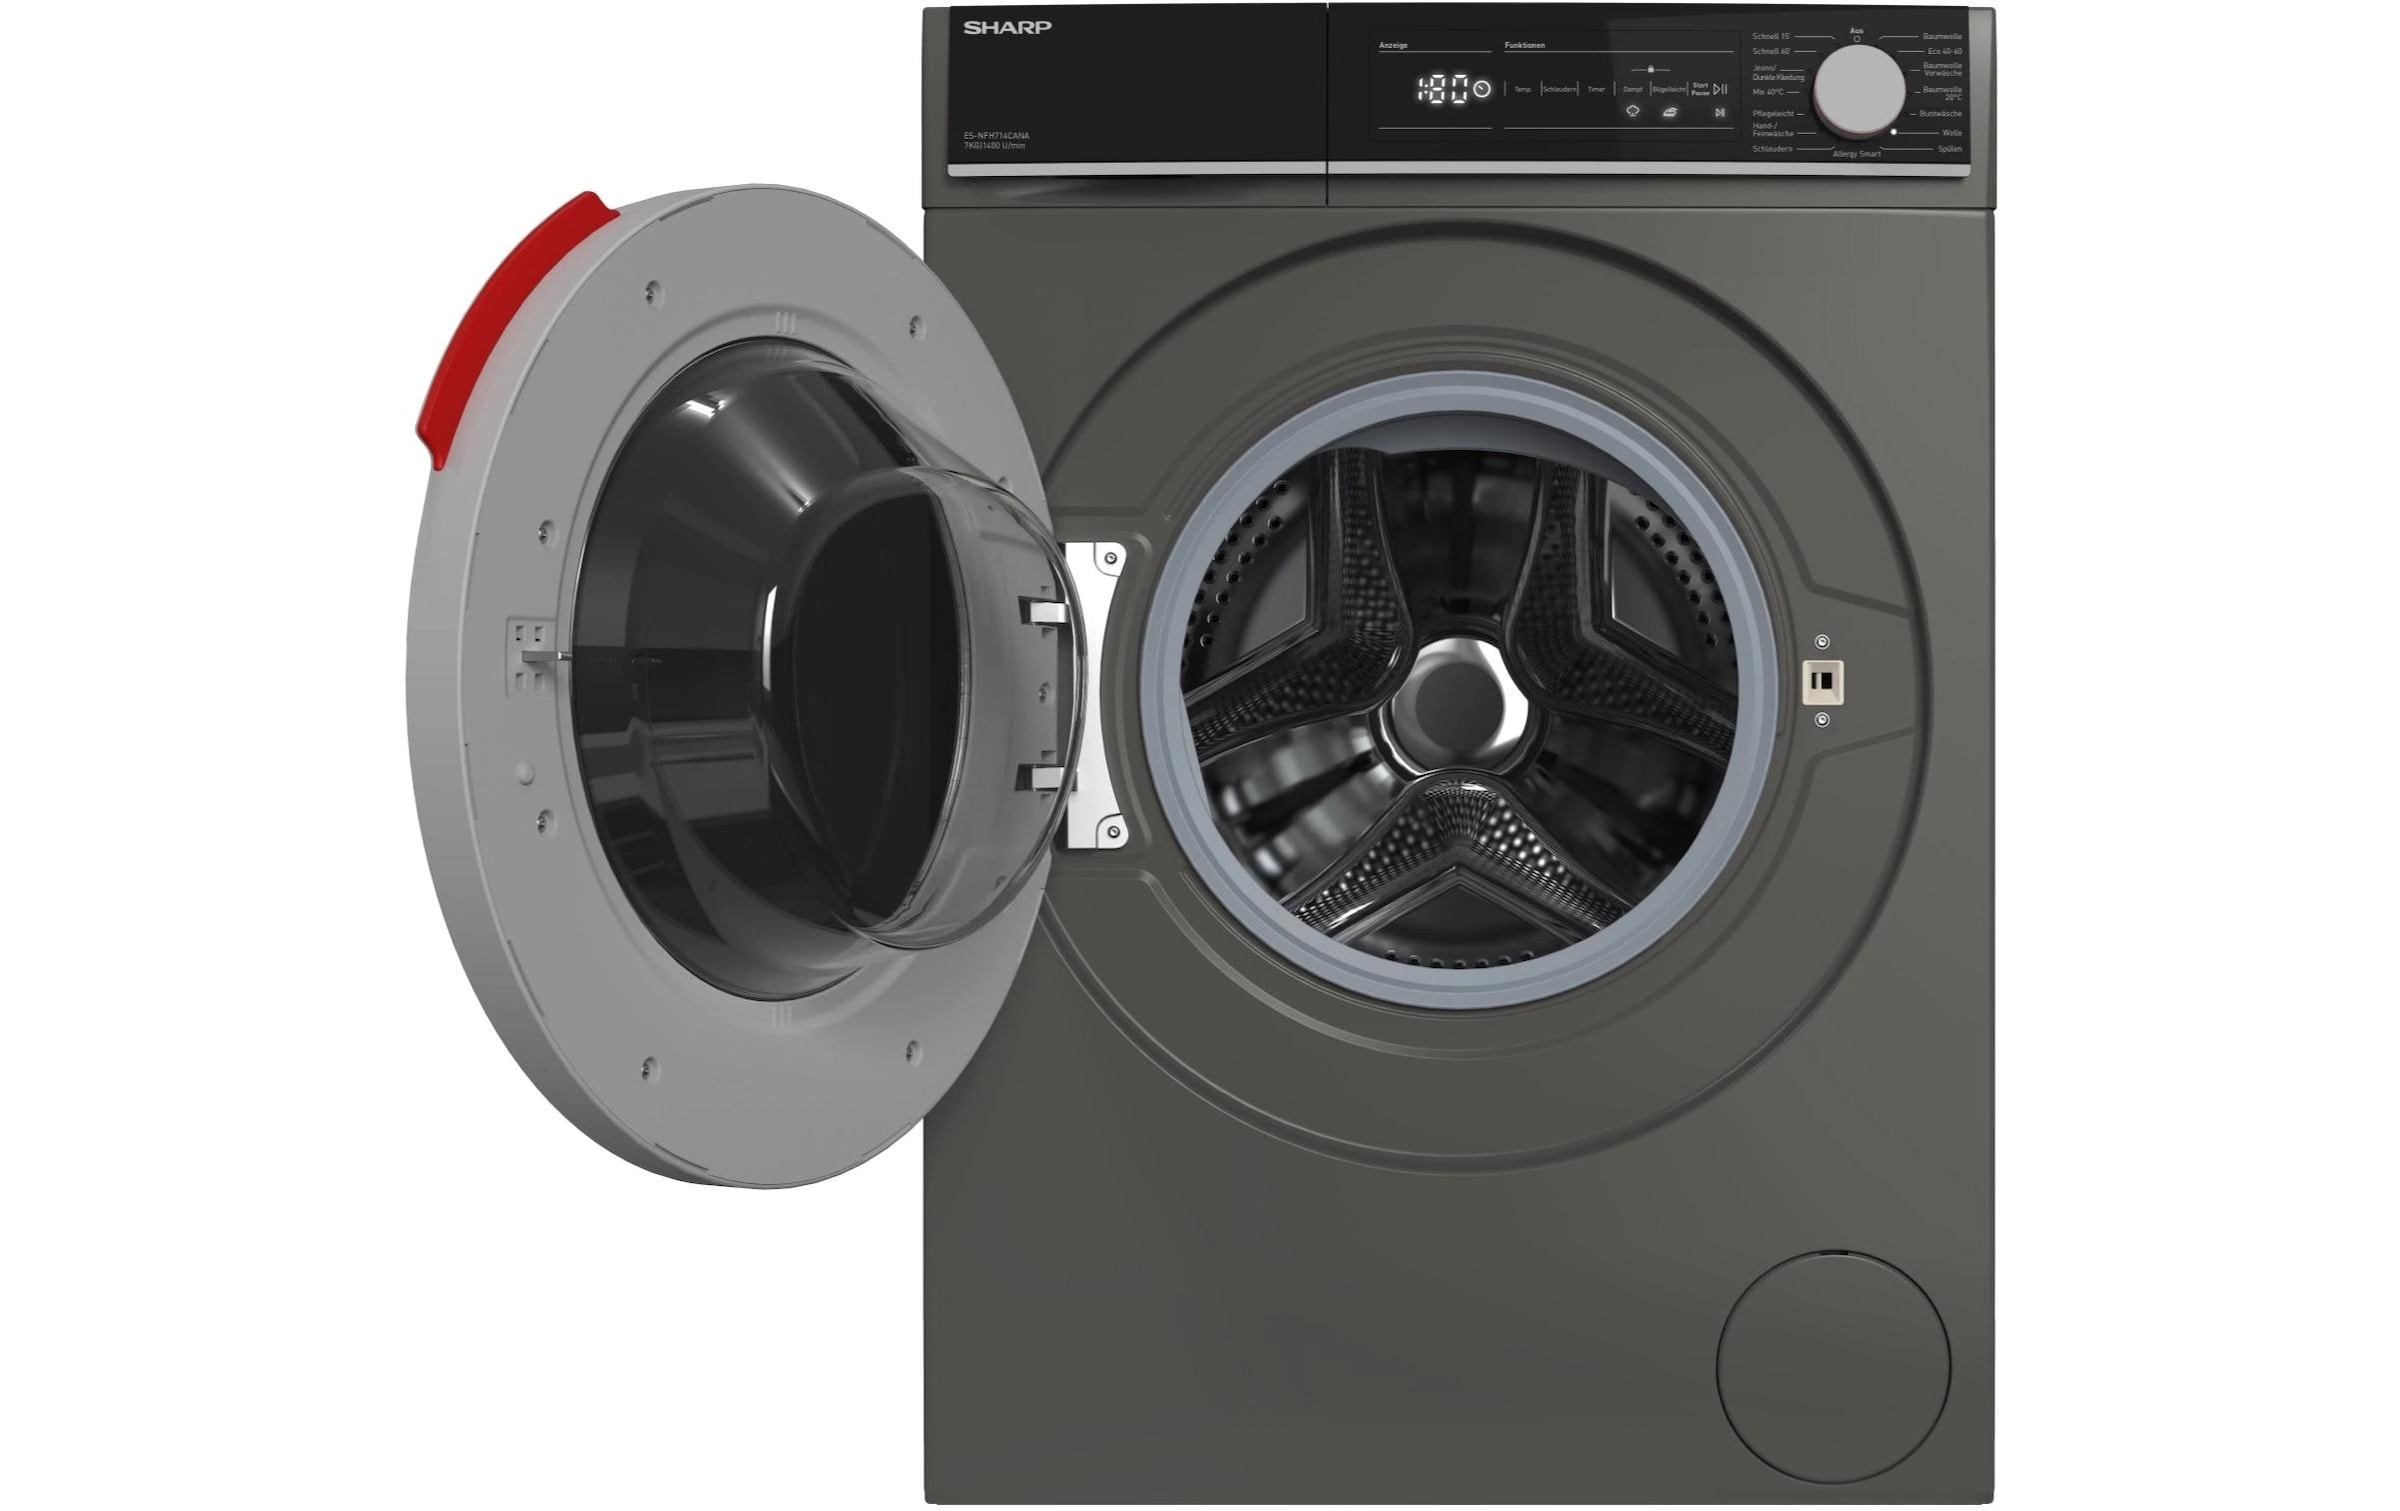 Sharp Waschmaschine »ES-NFH714CANA-DE Links«, ES-NFH714CANA-DE Links, 1400 U/min